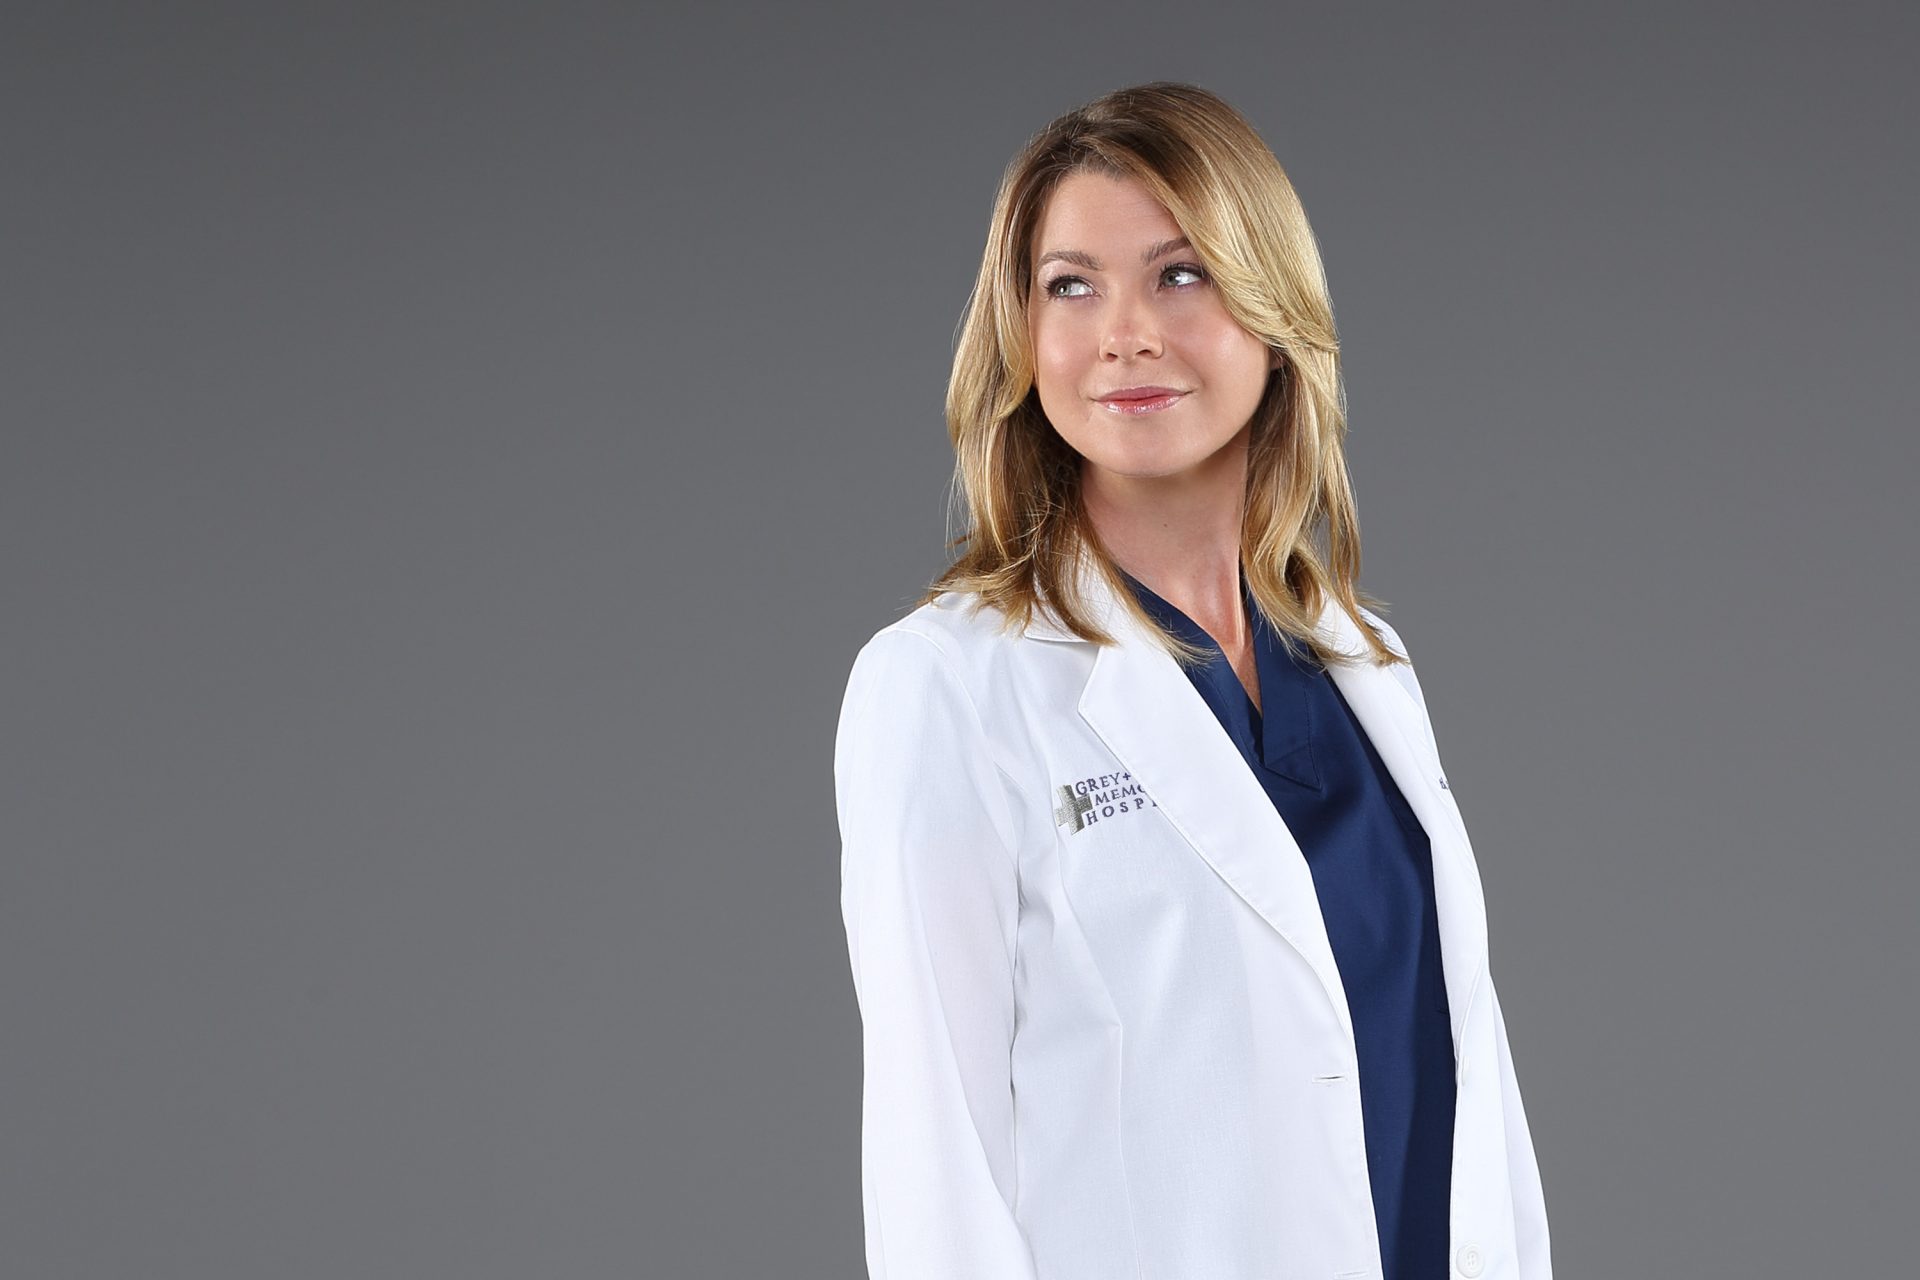 Meredith Grey / Grey's Anatomy (2005 - )